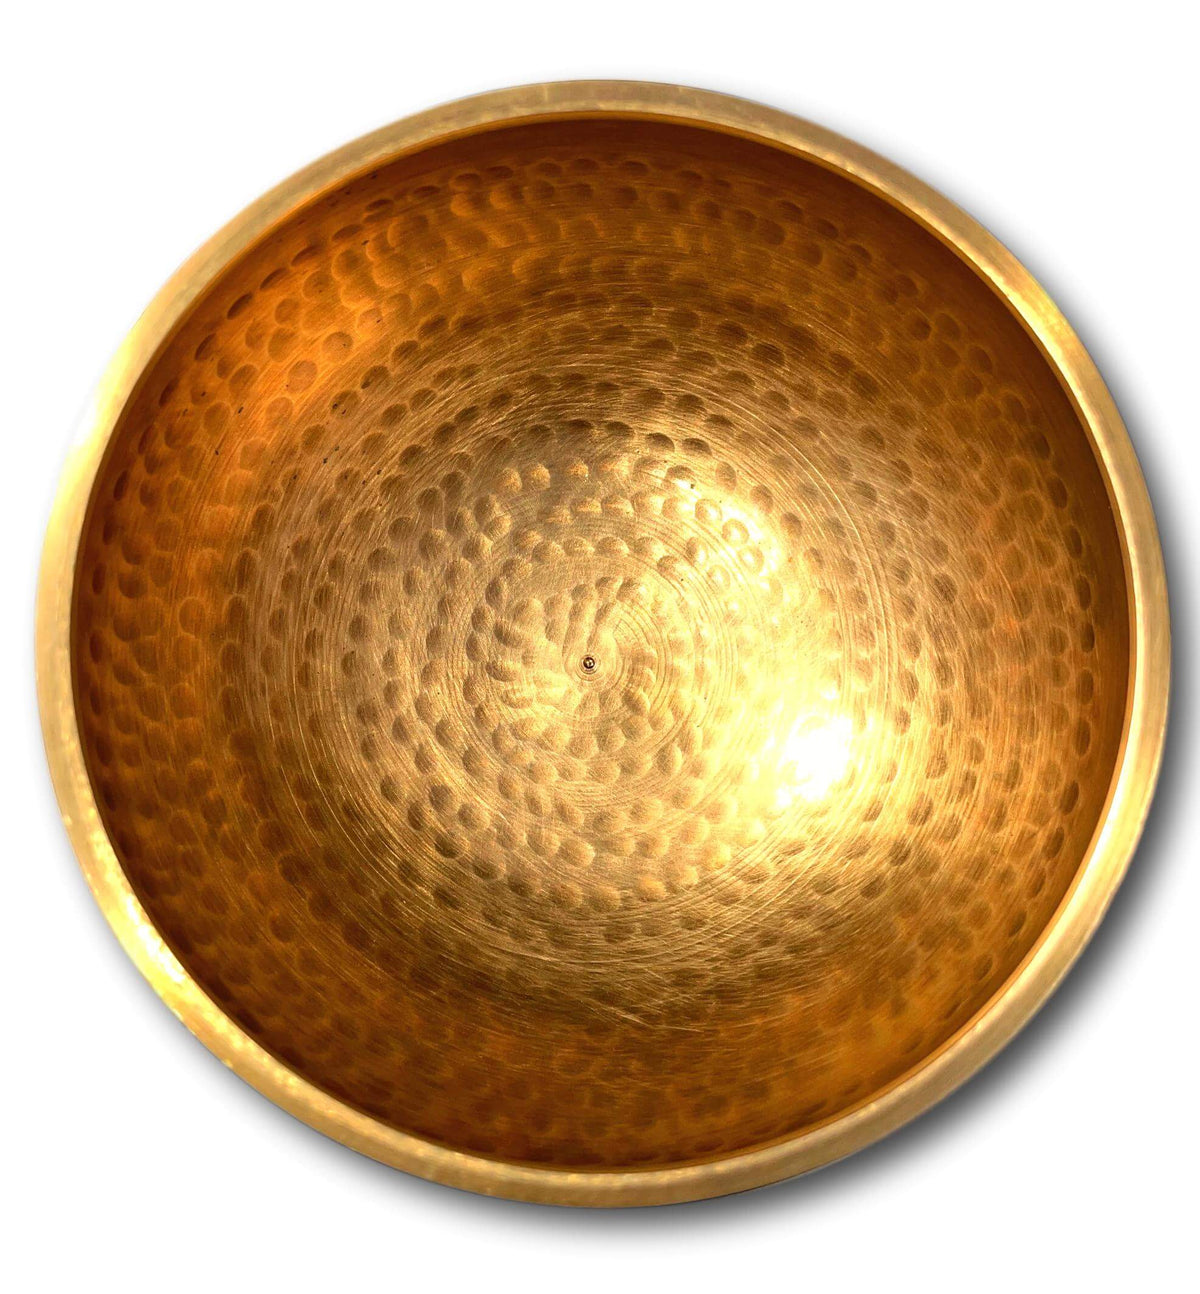 Gold Genuine Nepalese Singing Bowl - Made In Nepal (E5 Note Solar Plexus Chakra) Diameter 12.5cm